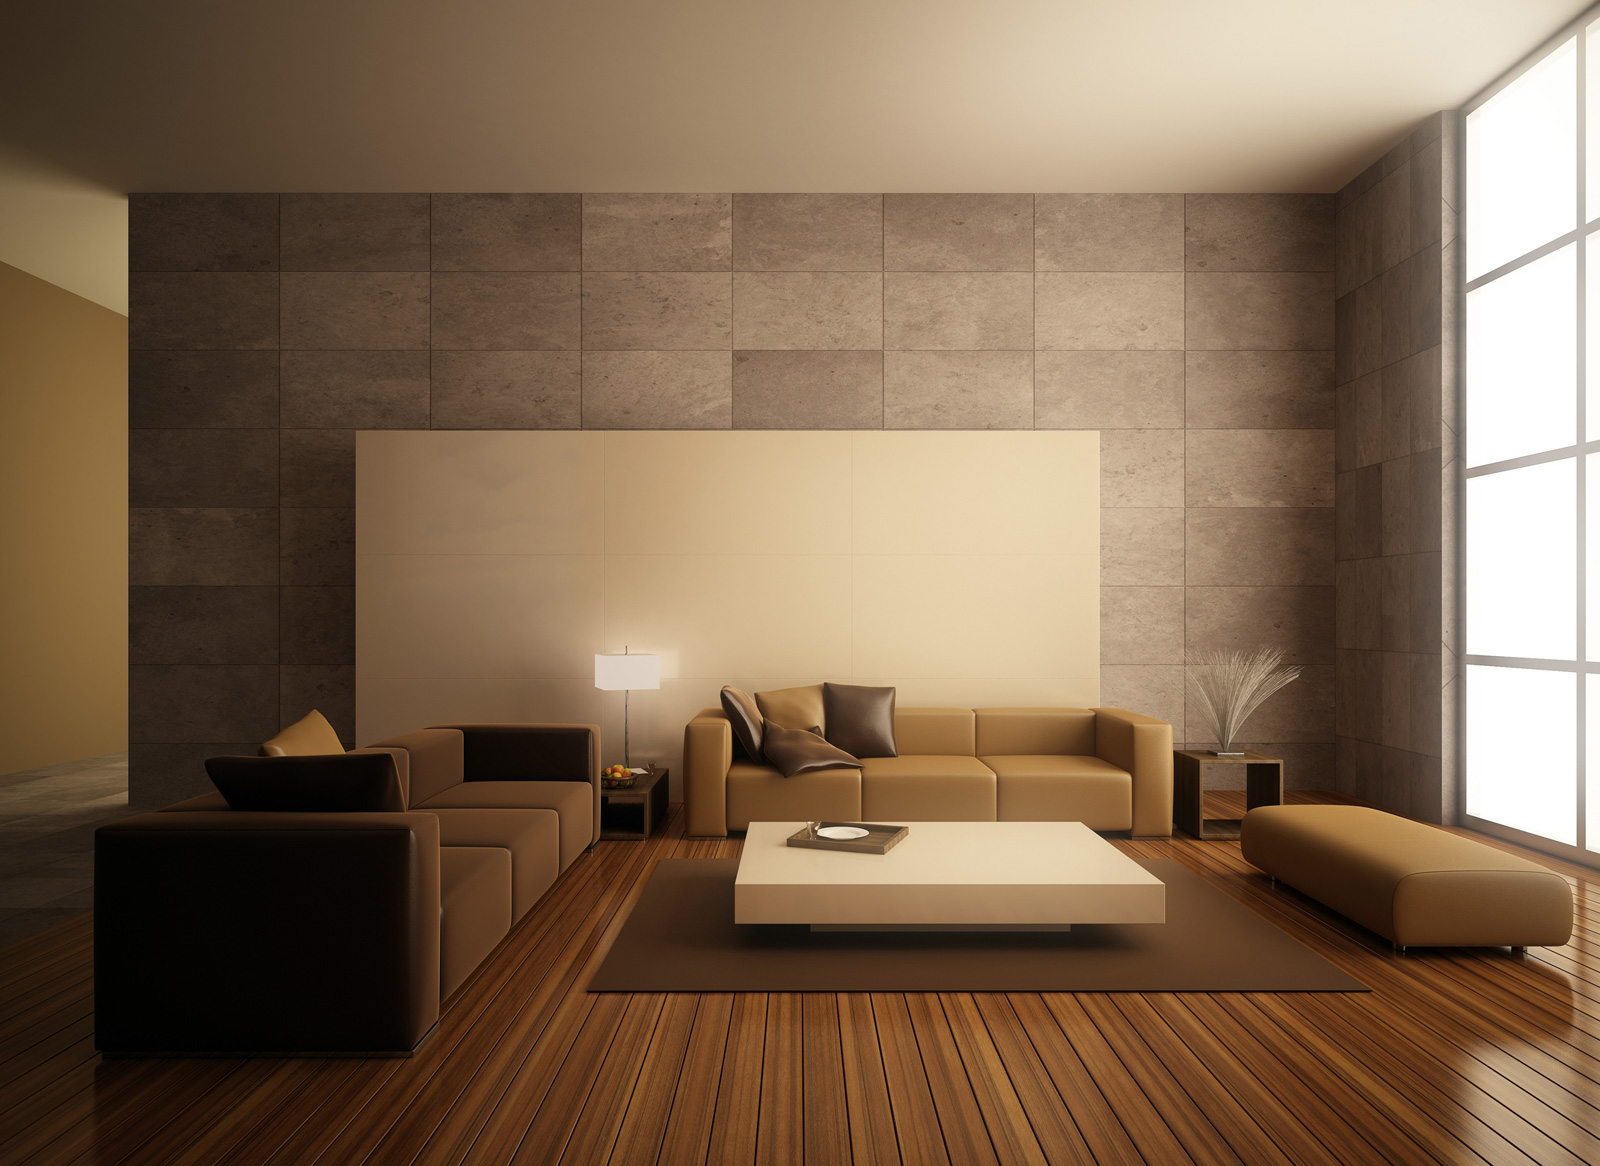 16 breathtaking minimalist interior design ideas for Minimalismo design